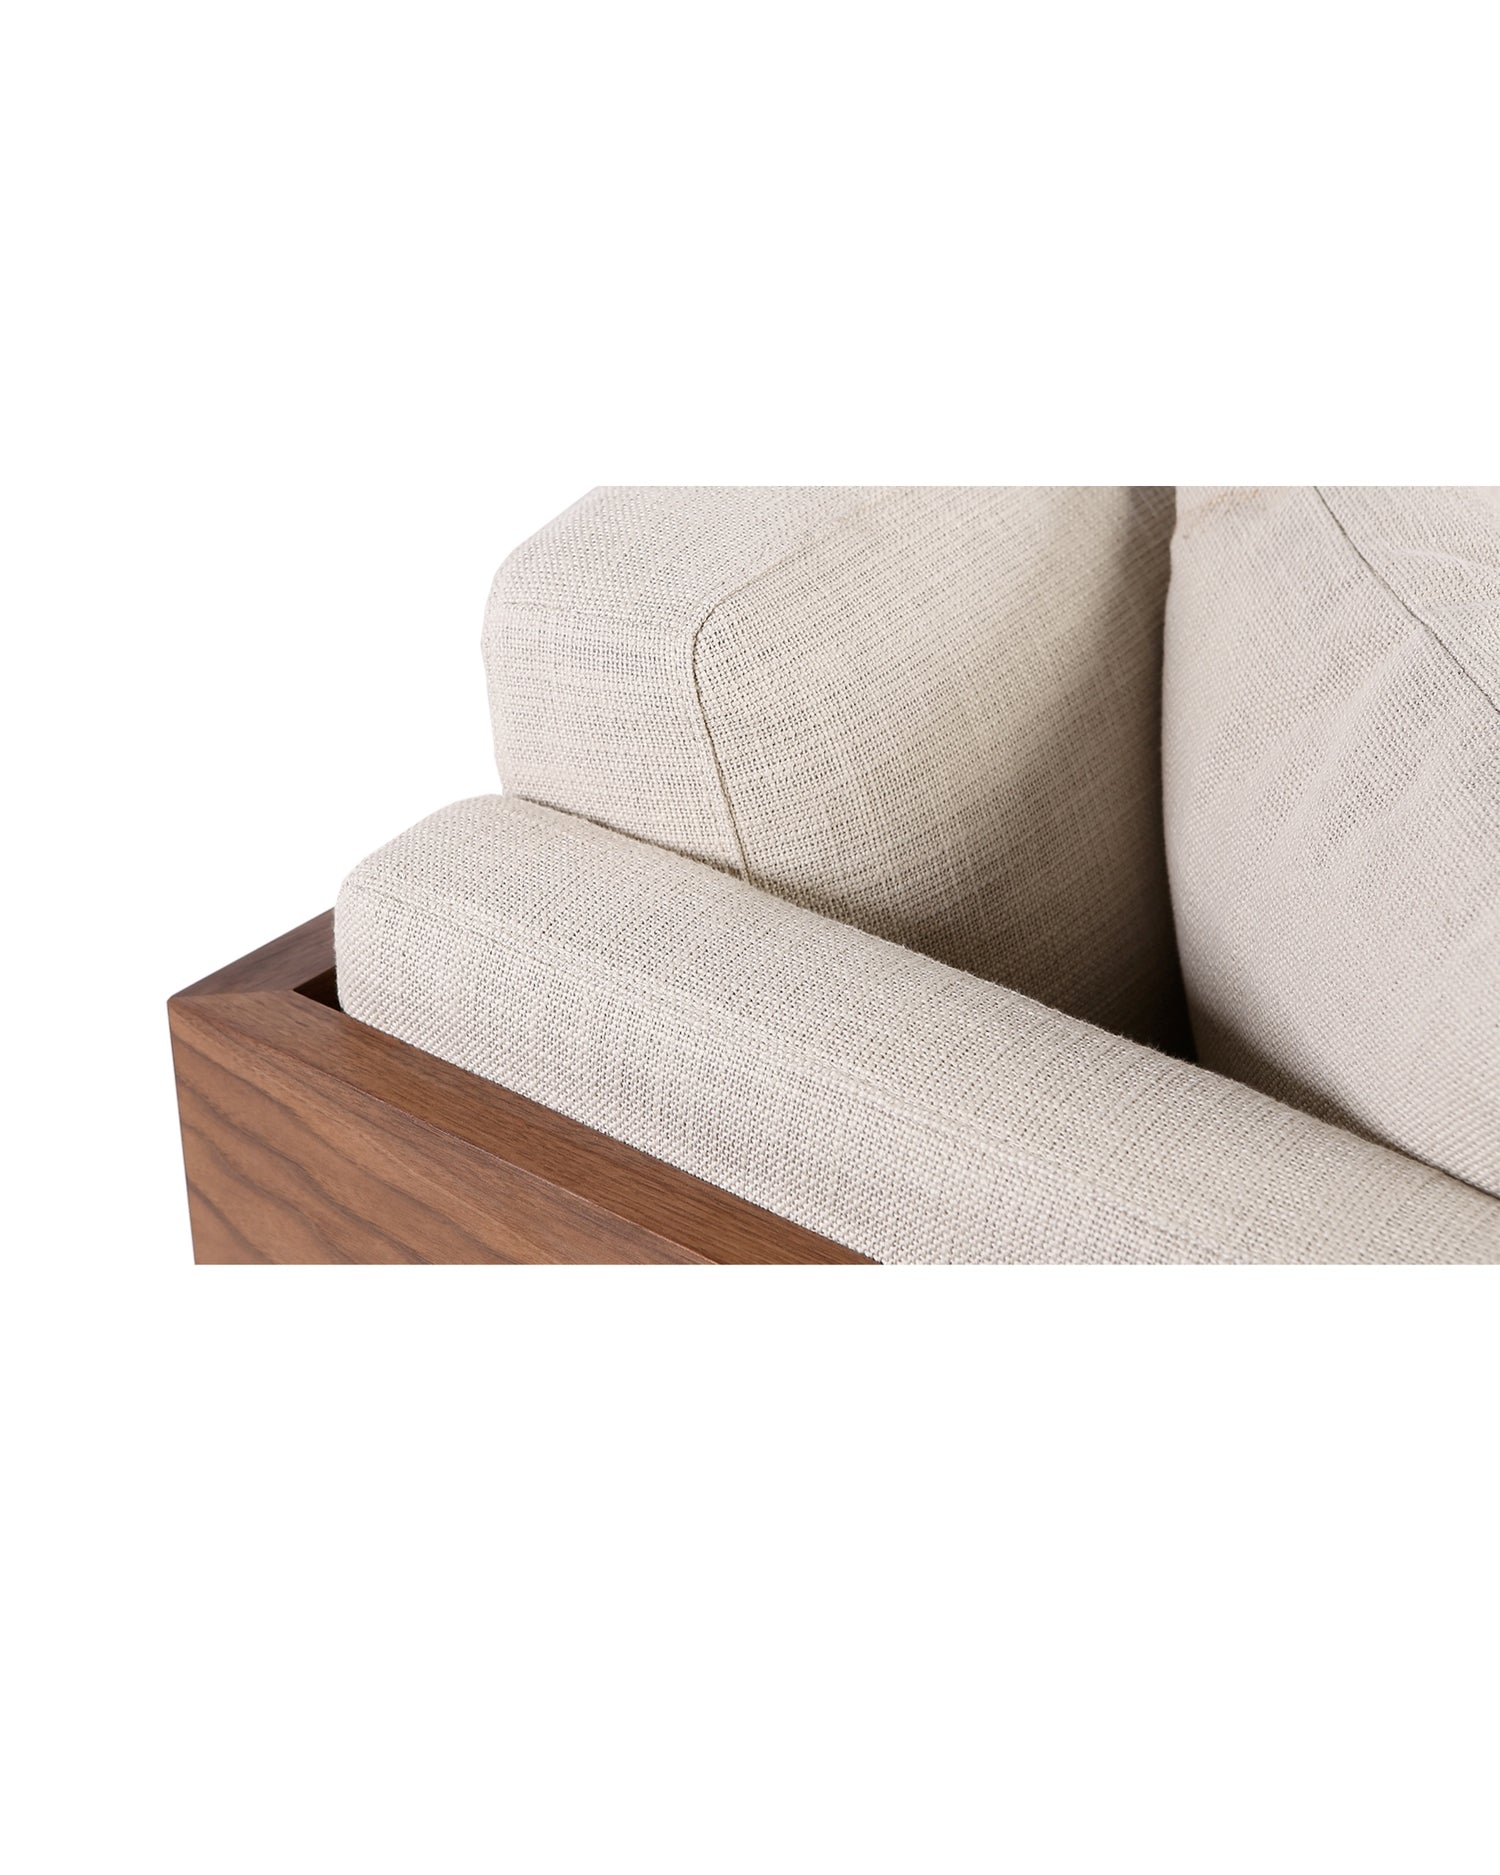 Woodrow Lush 87" Fabric Sofa, Walnut / Urban Hemp Closeup